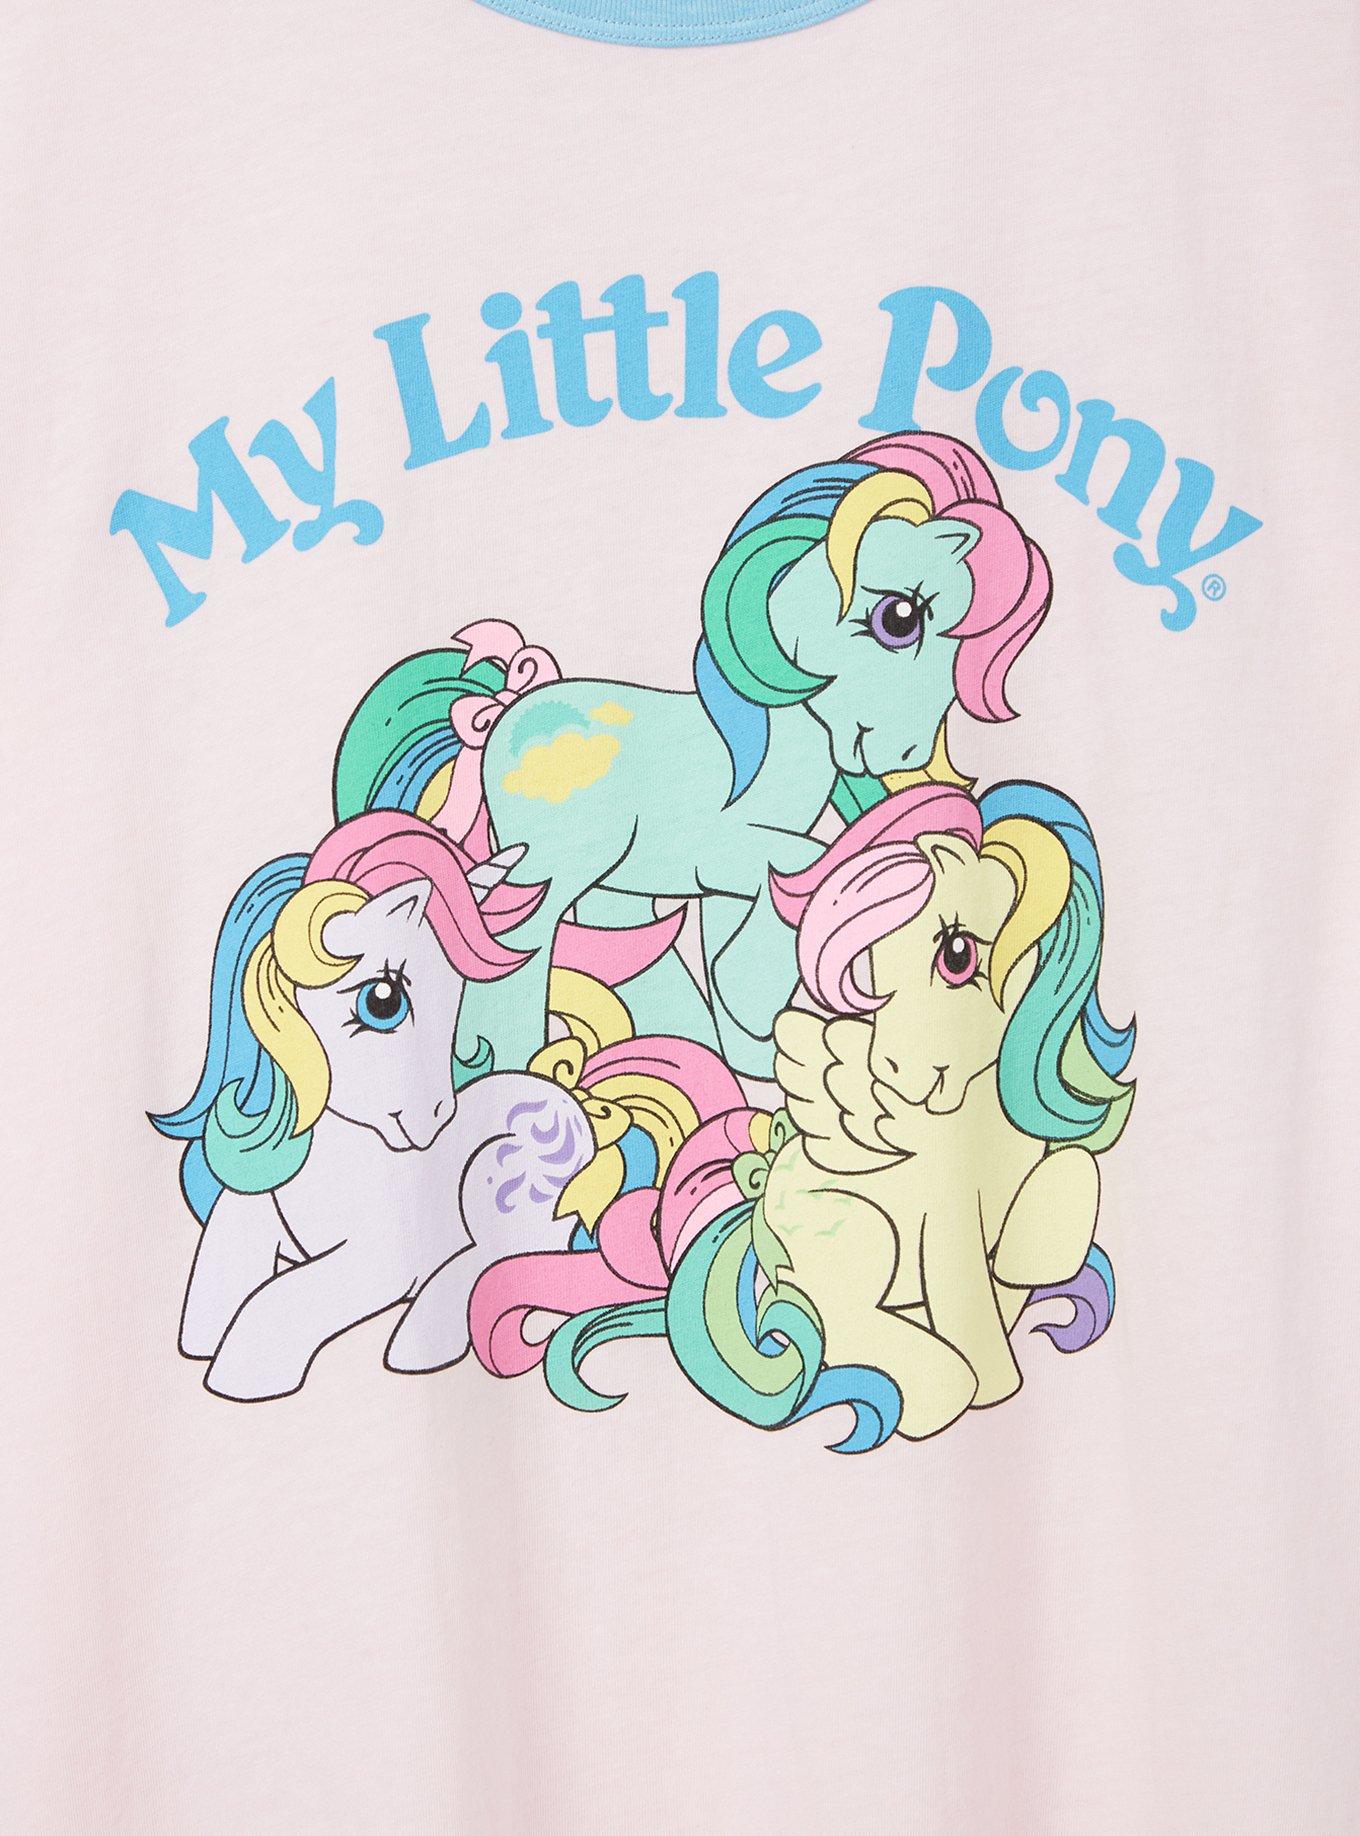 My Little Pony Classic